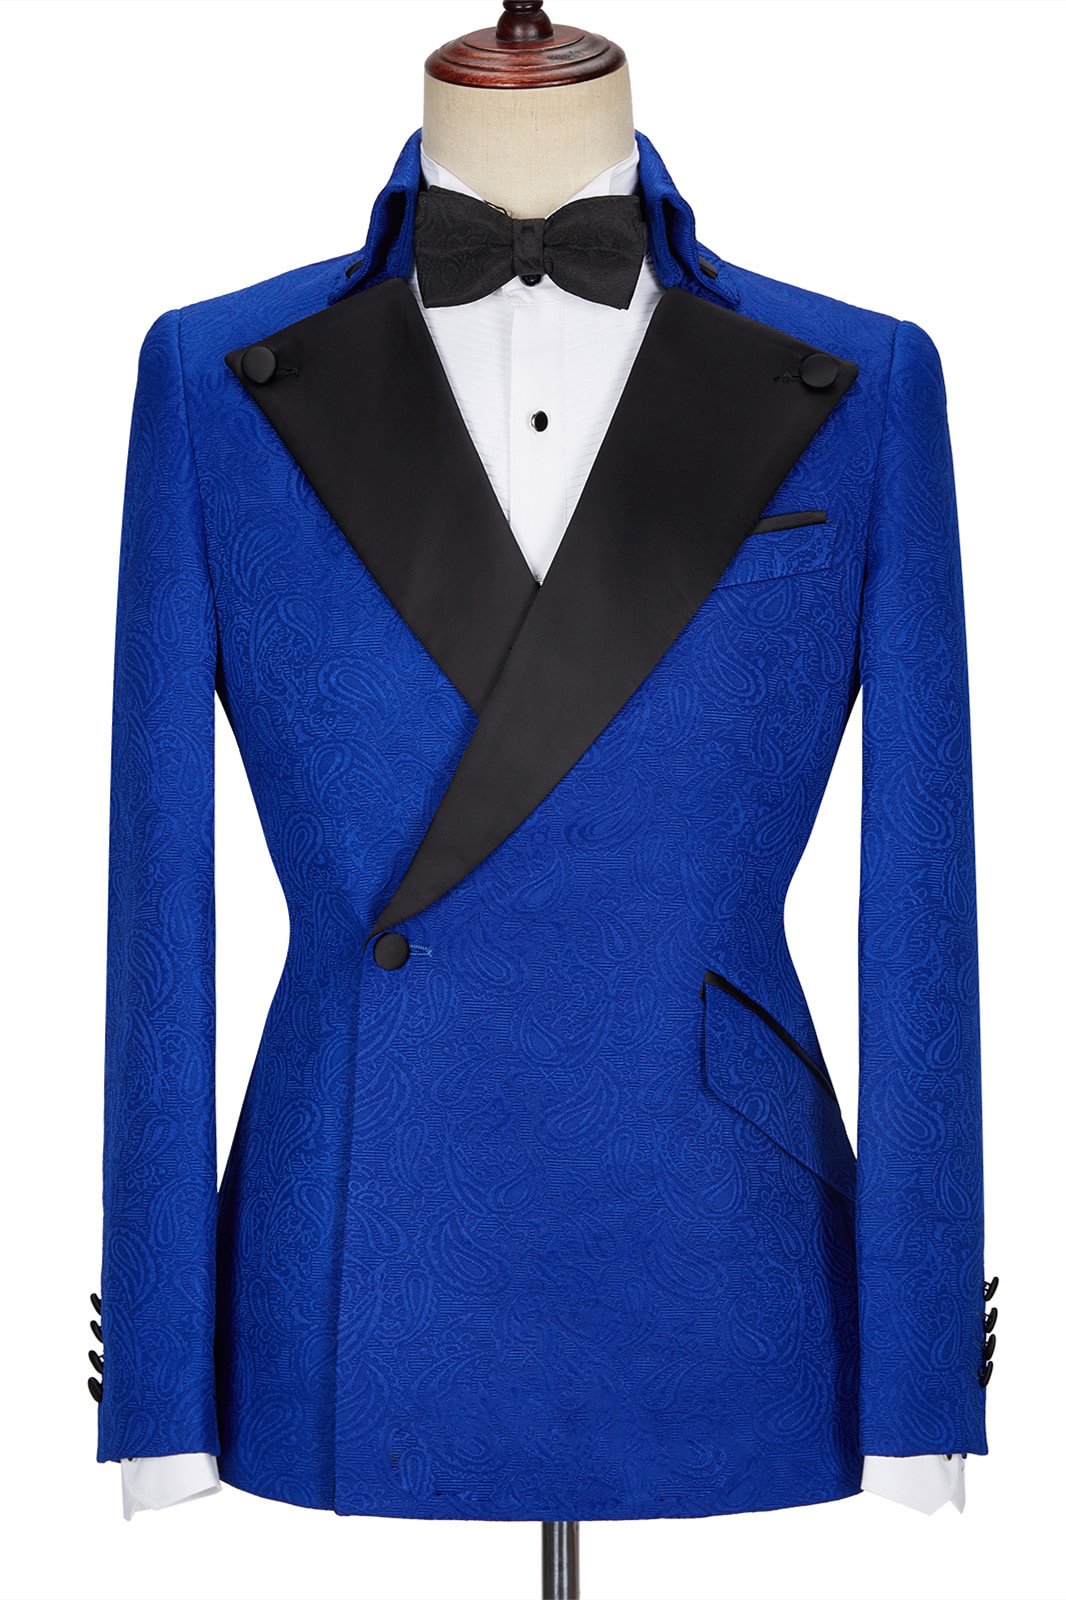 Jacquard New Arrival Royal Blue Wedding Suits with Black Lapel | Ballbellas Ballbellas